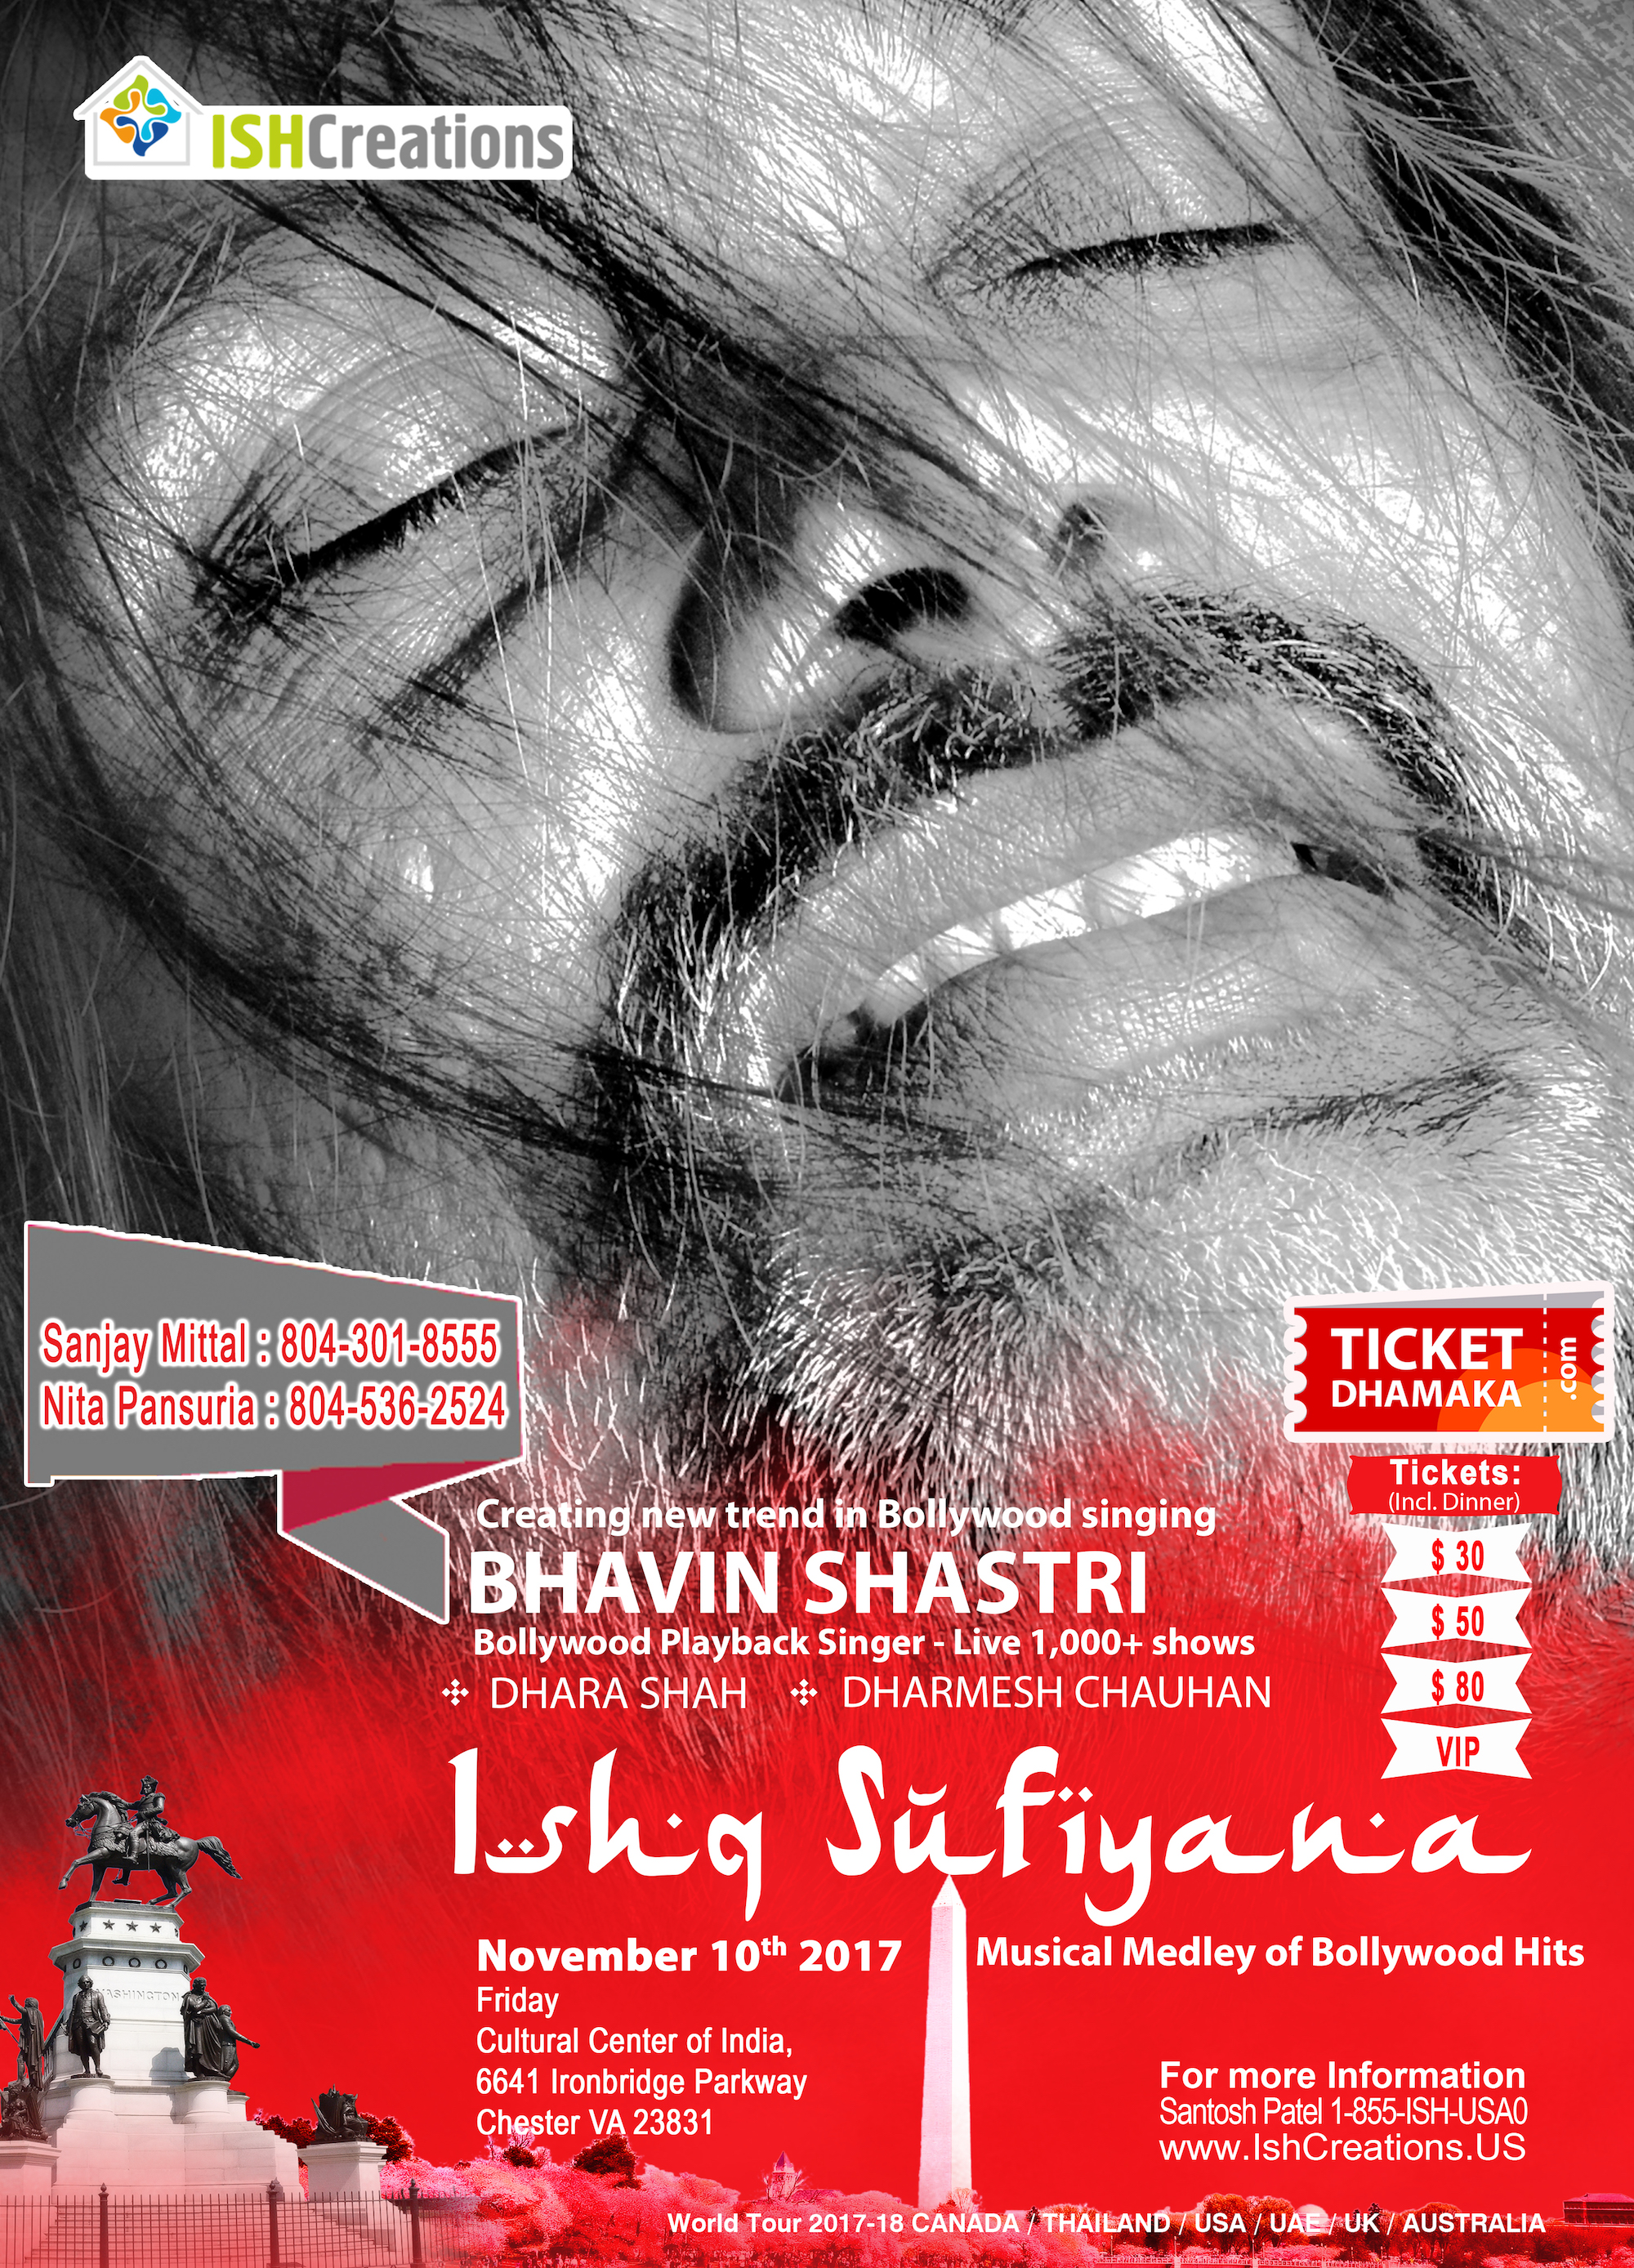 Bhavin Shastri
bollywood Playback Singer-Live
Ishq Sufiyana
Musical Medley of Bollywood Hits